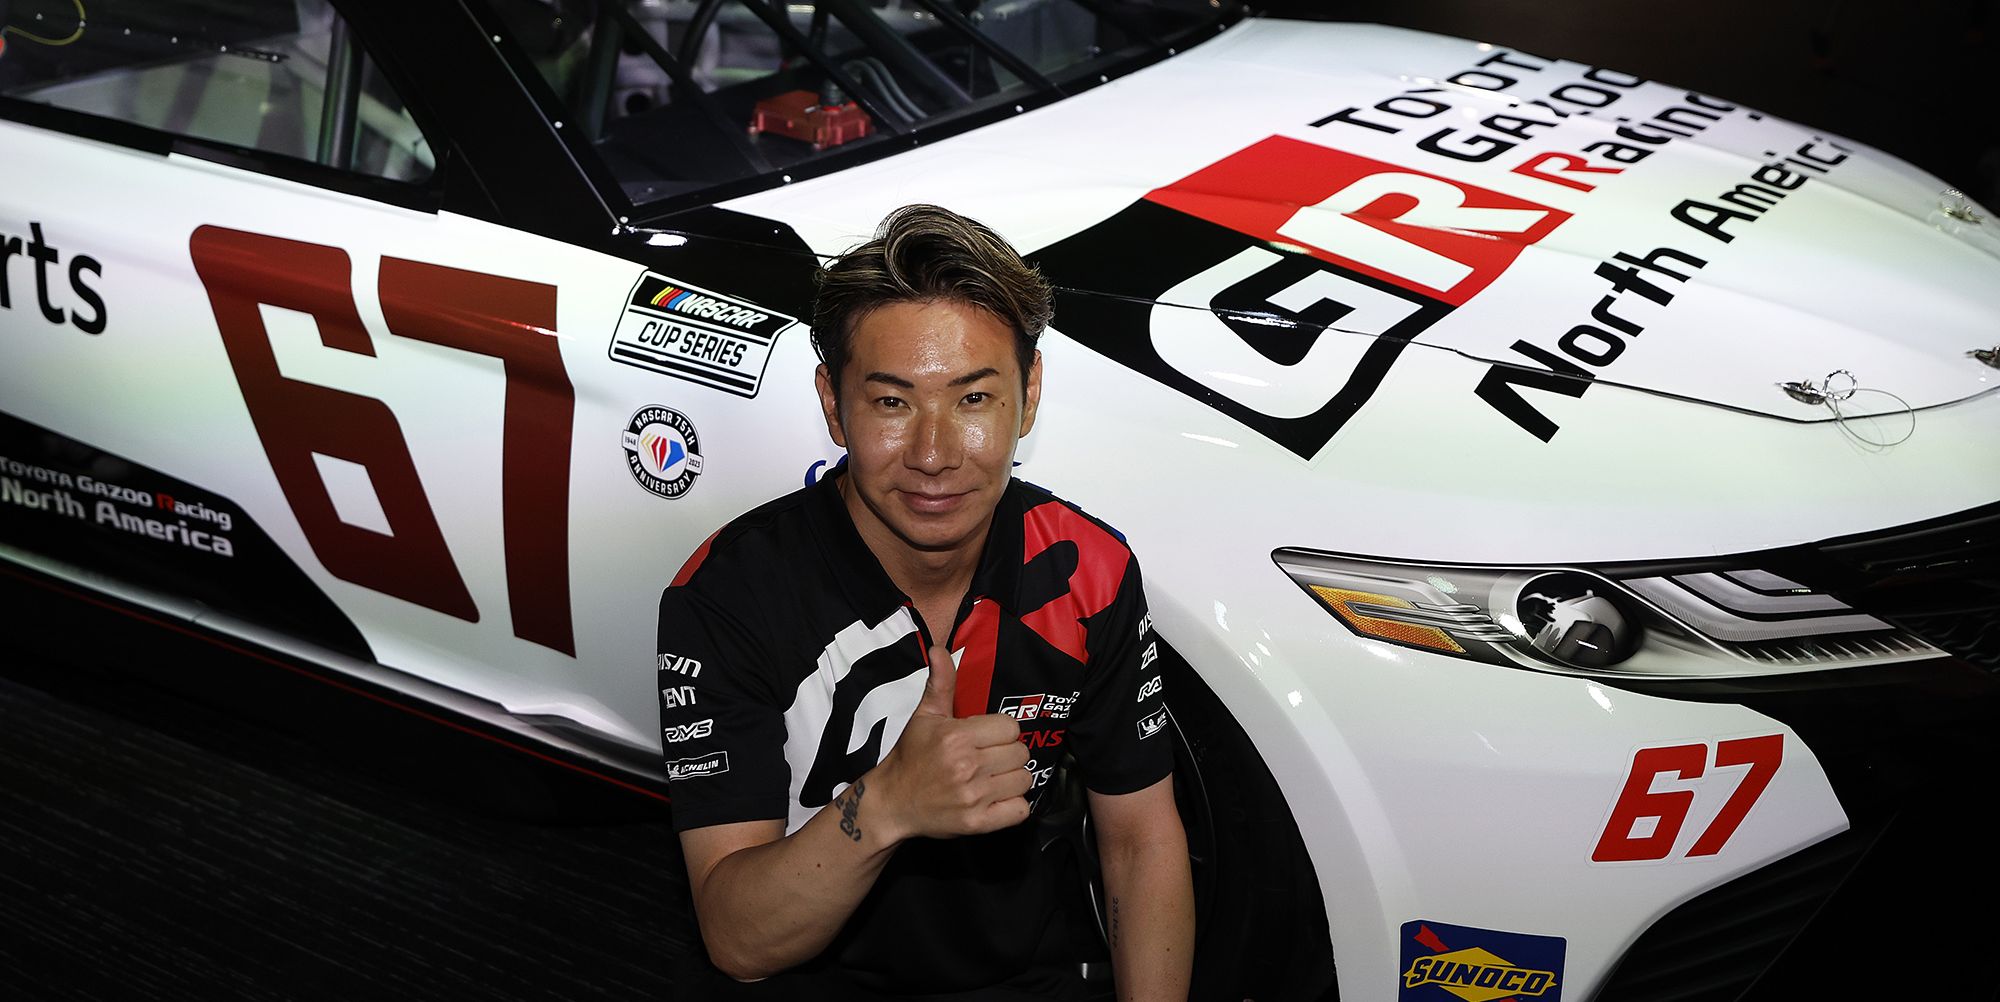 Le Mans Winner Kamui Kobayashi to Make NASCAR Cup Debut With 23XI